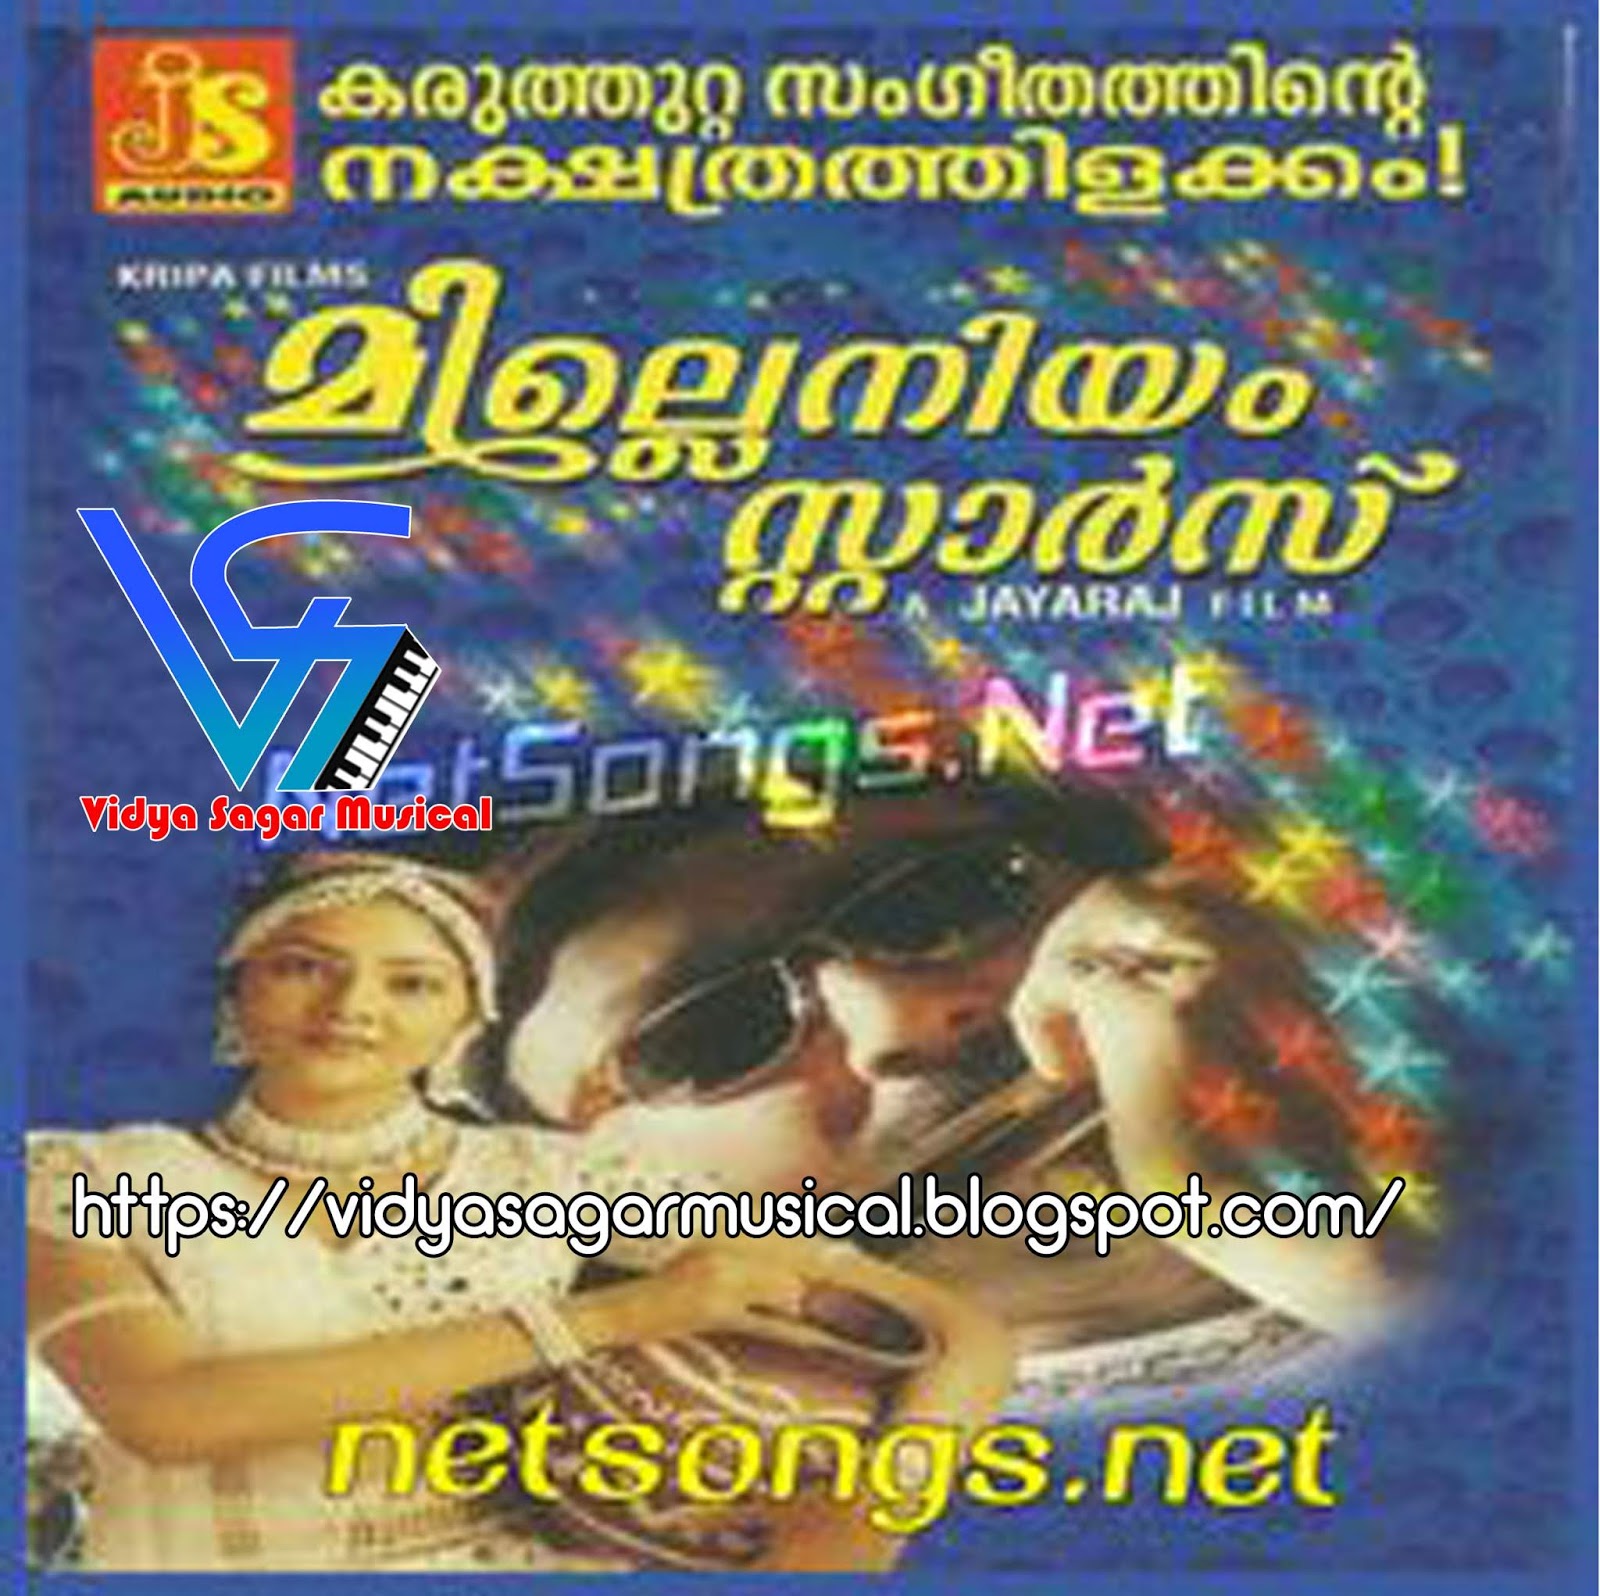 millennium stars malayalam movie mp3 download